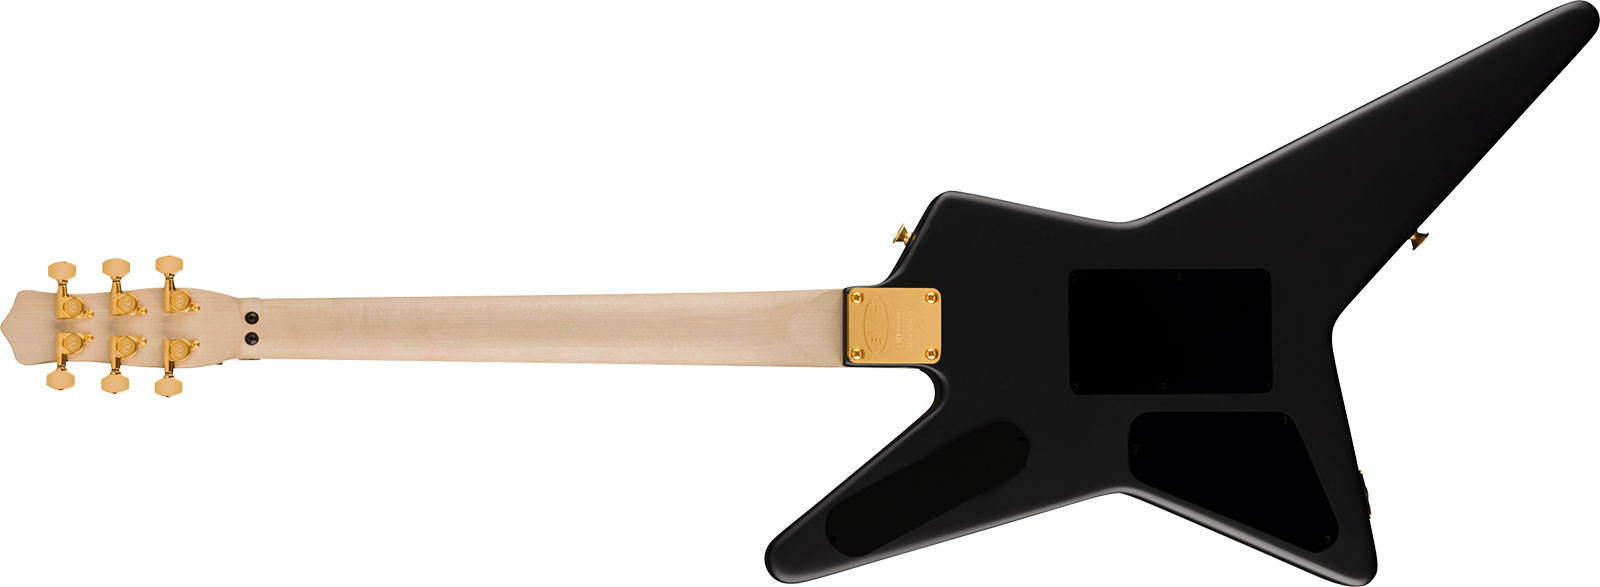 Evh Star Limited Edition 1h Fr Eb - Stealth Black With Gold Hardware - Metal electric guitar - Variation 1